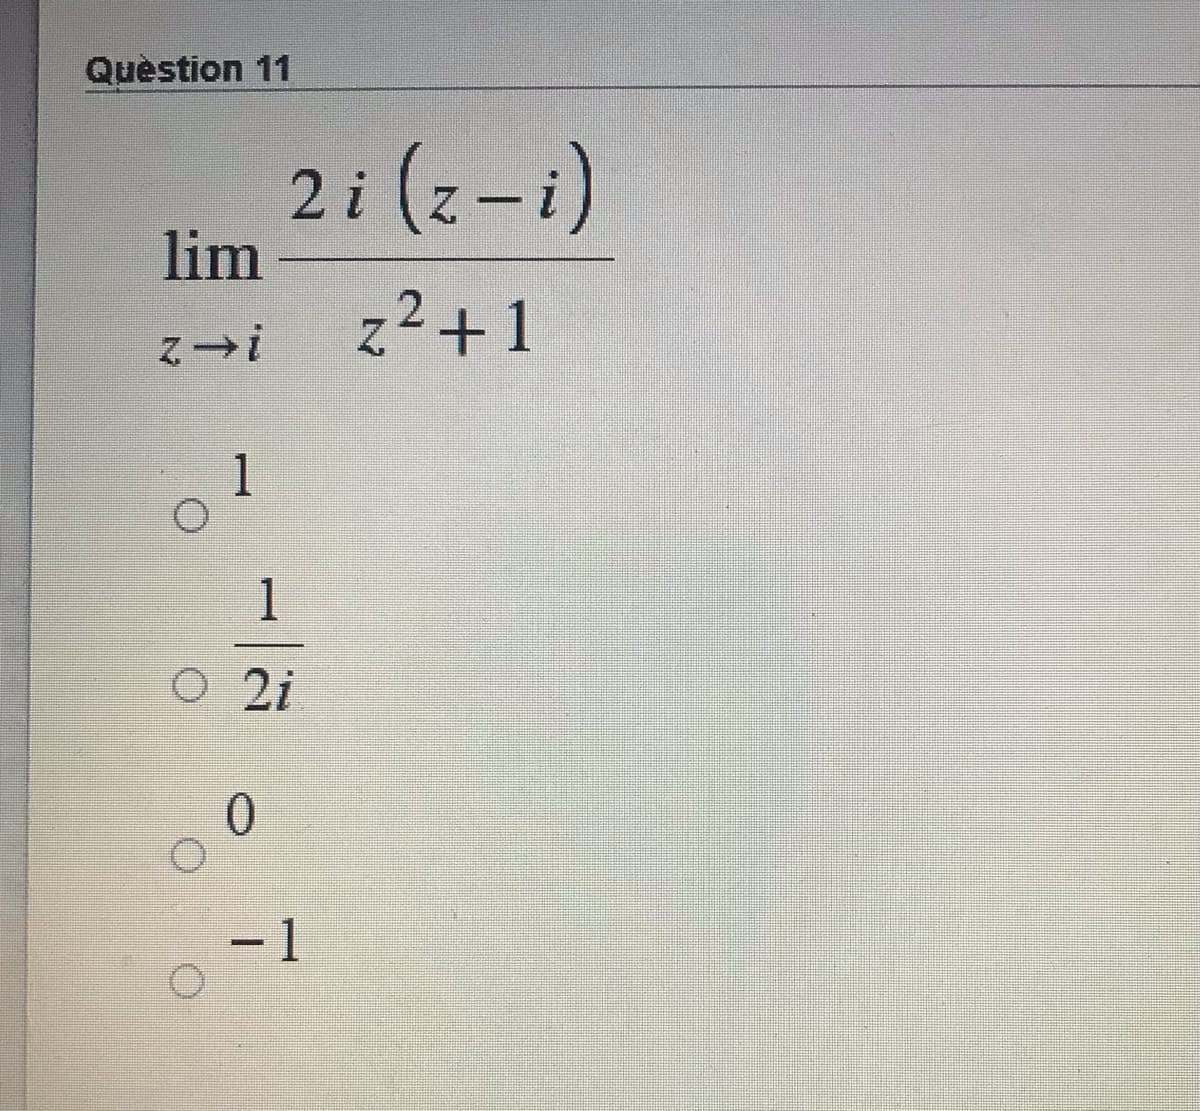 Quèstion 11
2 i (z-i)
lim
z²+1
1
1
O 2i
- 1
